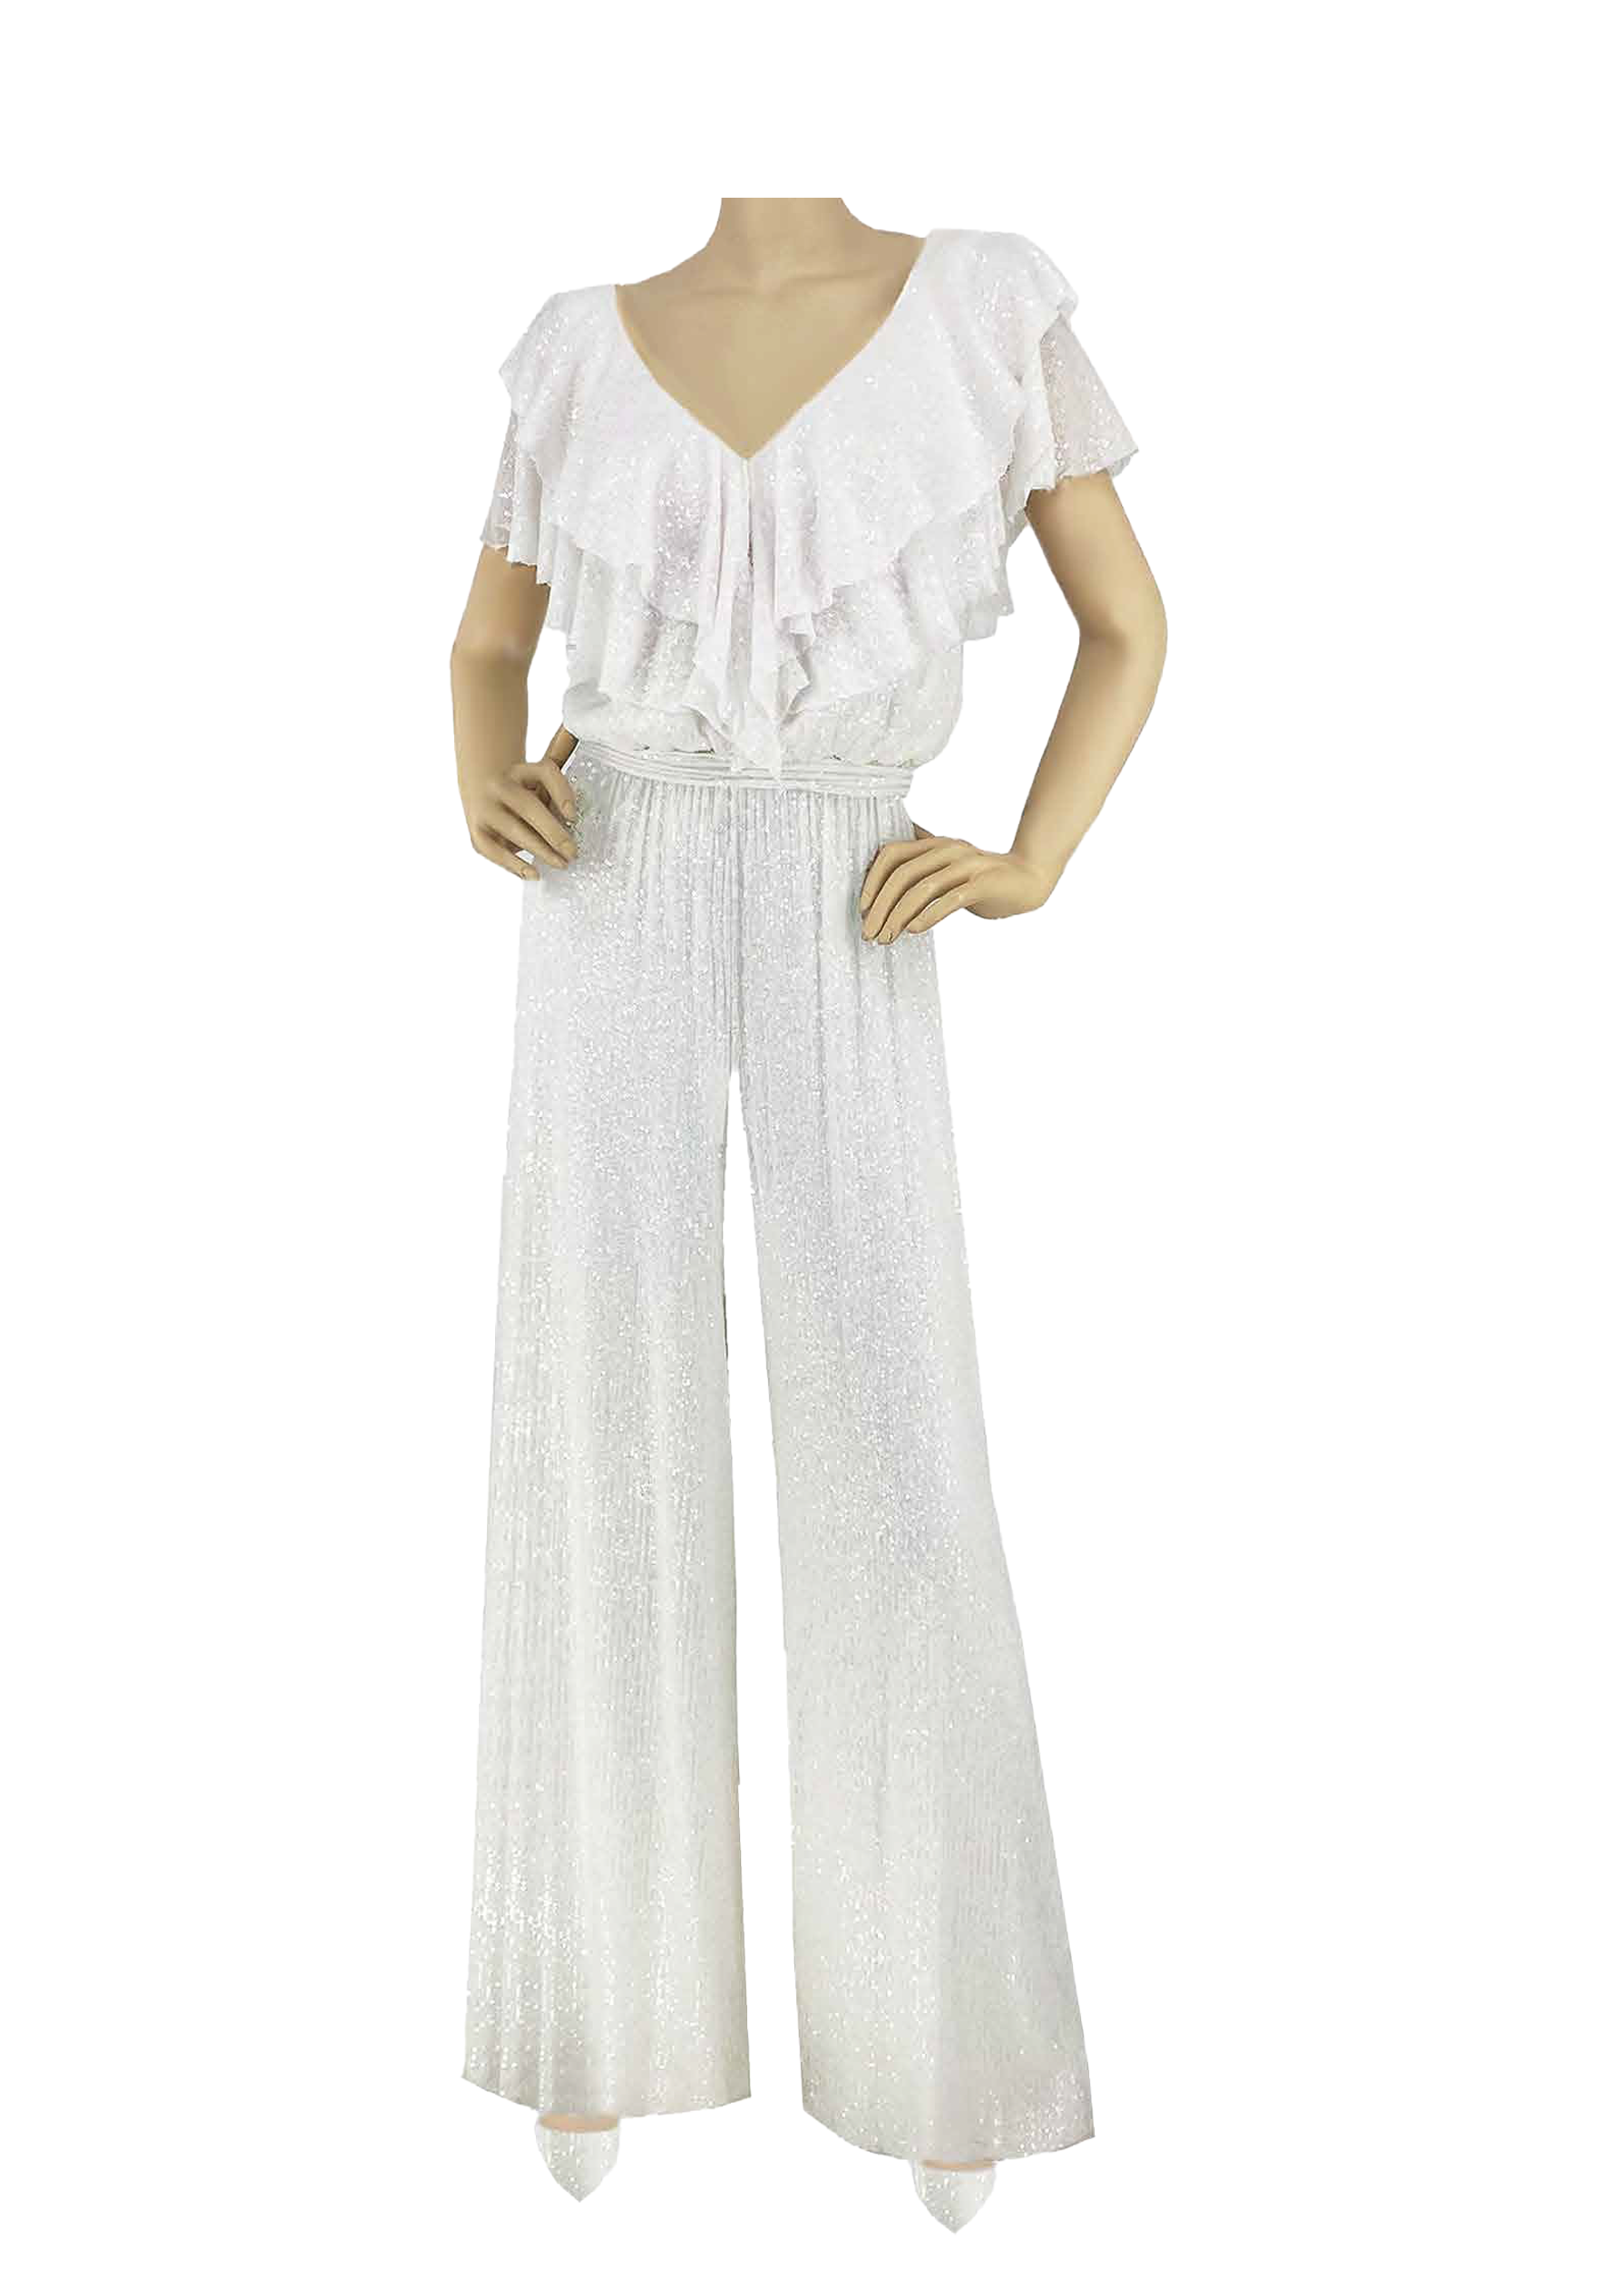 White Liquid Sequin Jumpsuit LSJU1 - Sara Mique Evening Wear